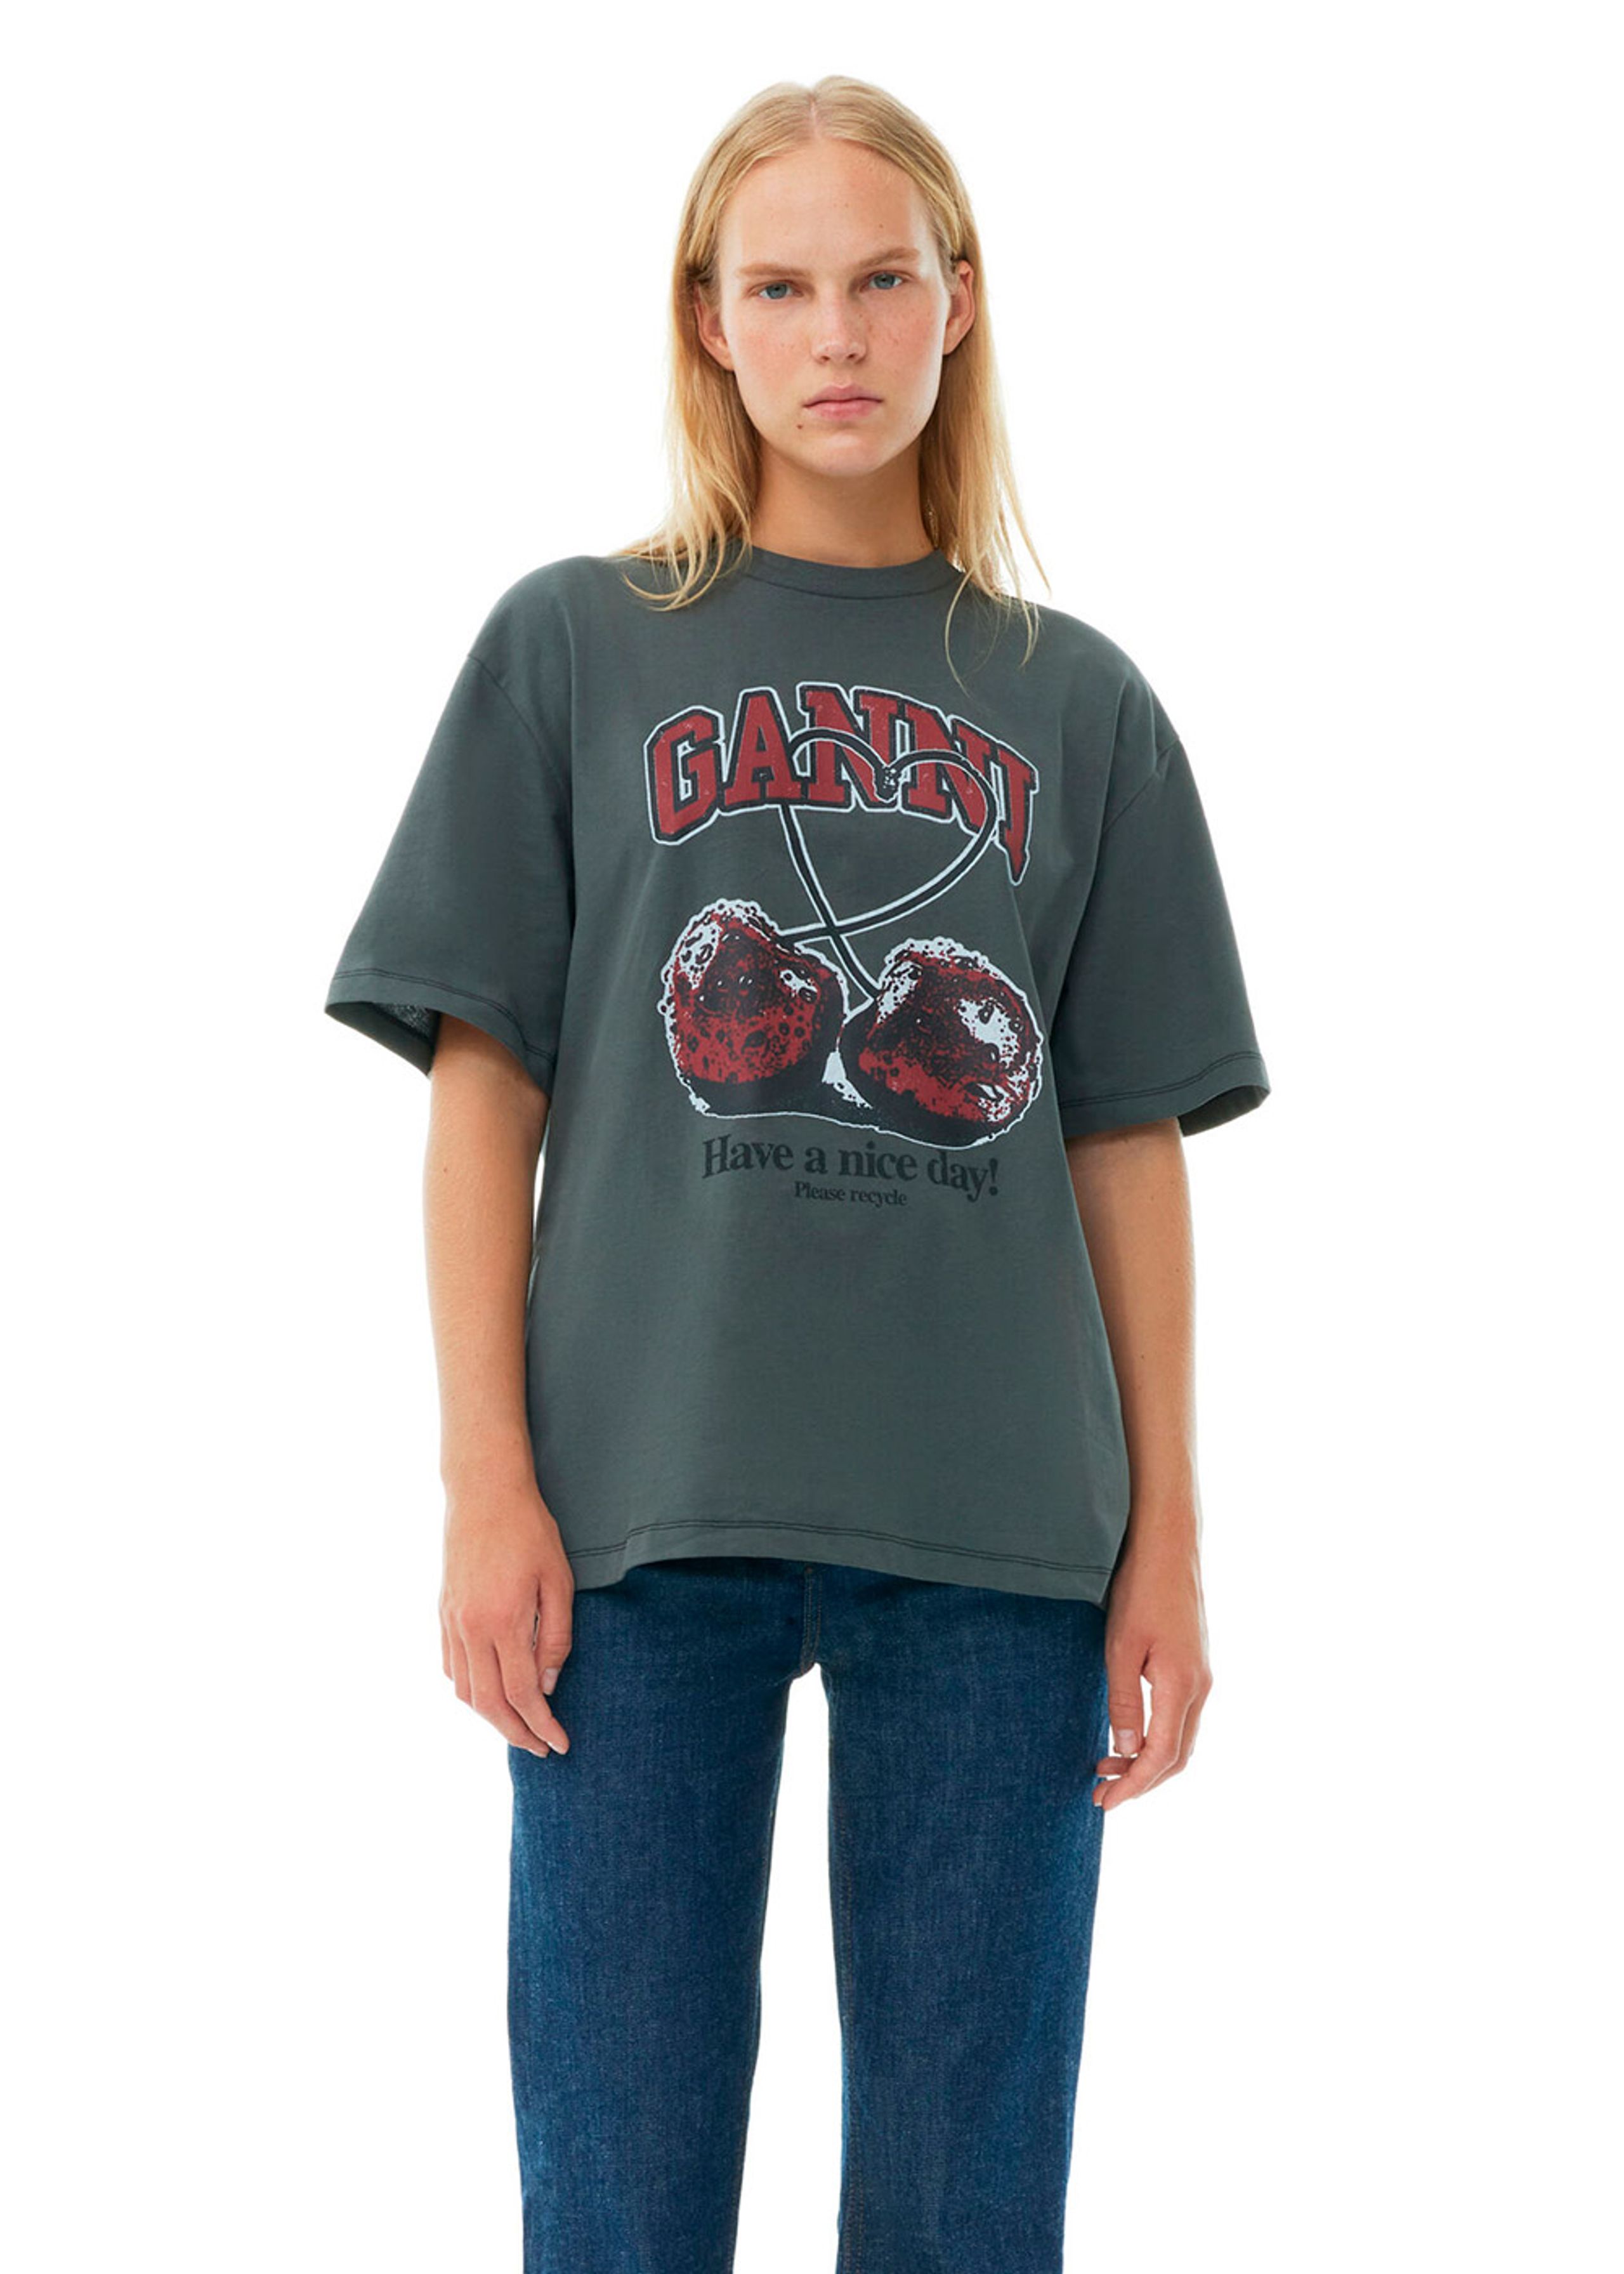 Ganni - T-shirt - Future Heavy Jersey Cherry - Volcanic Ash